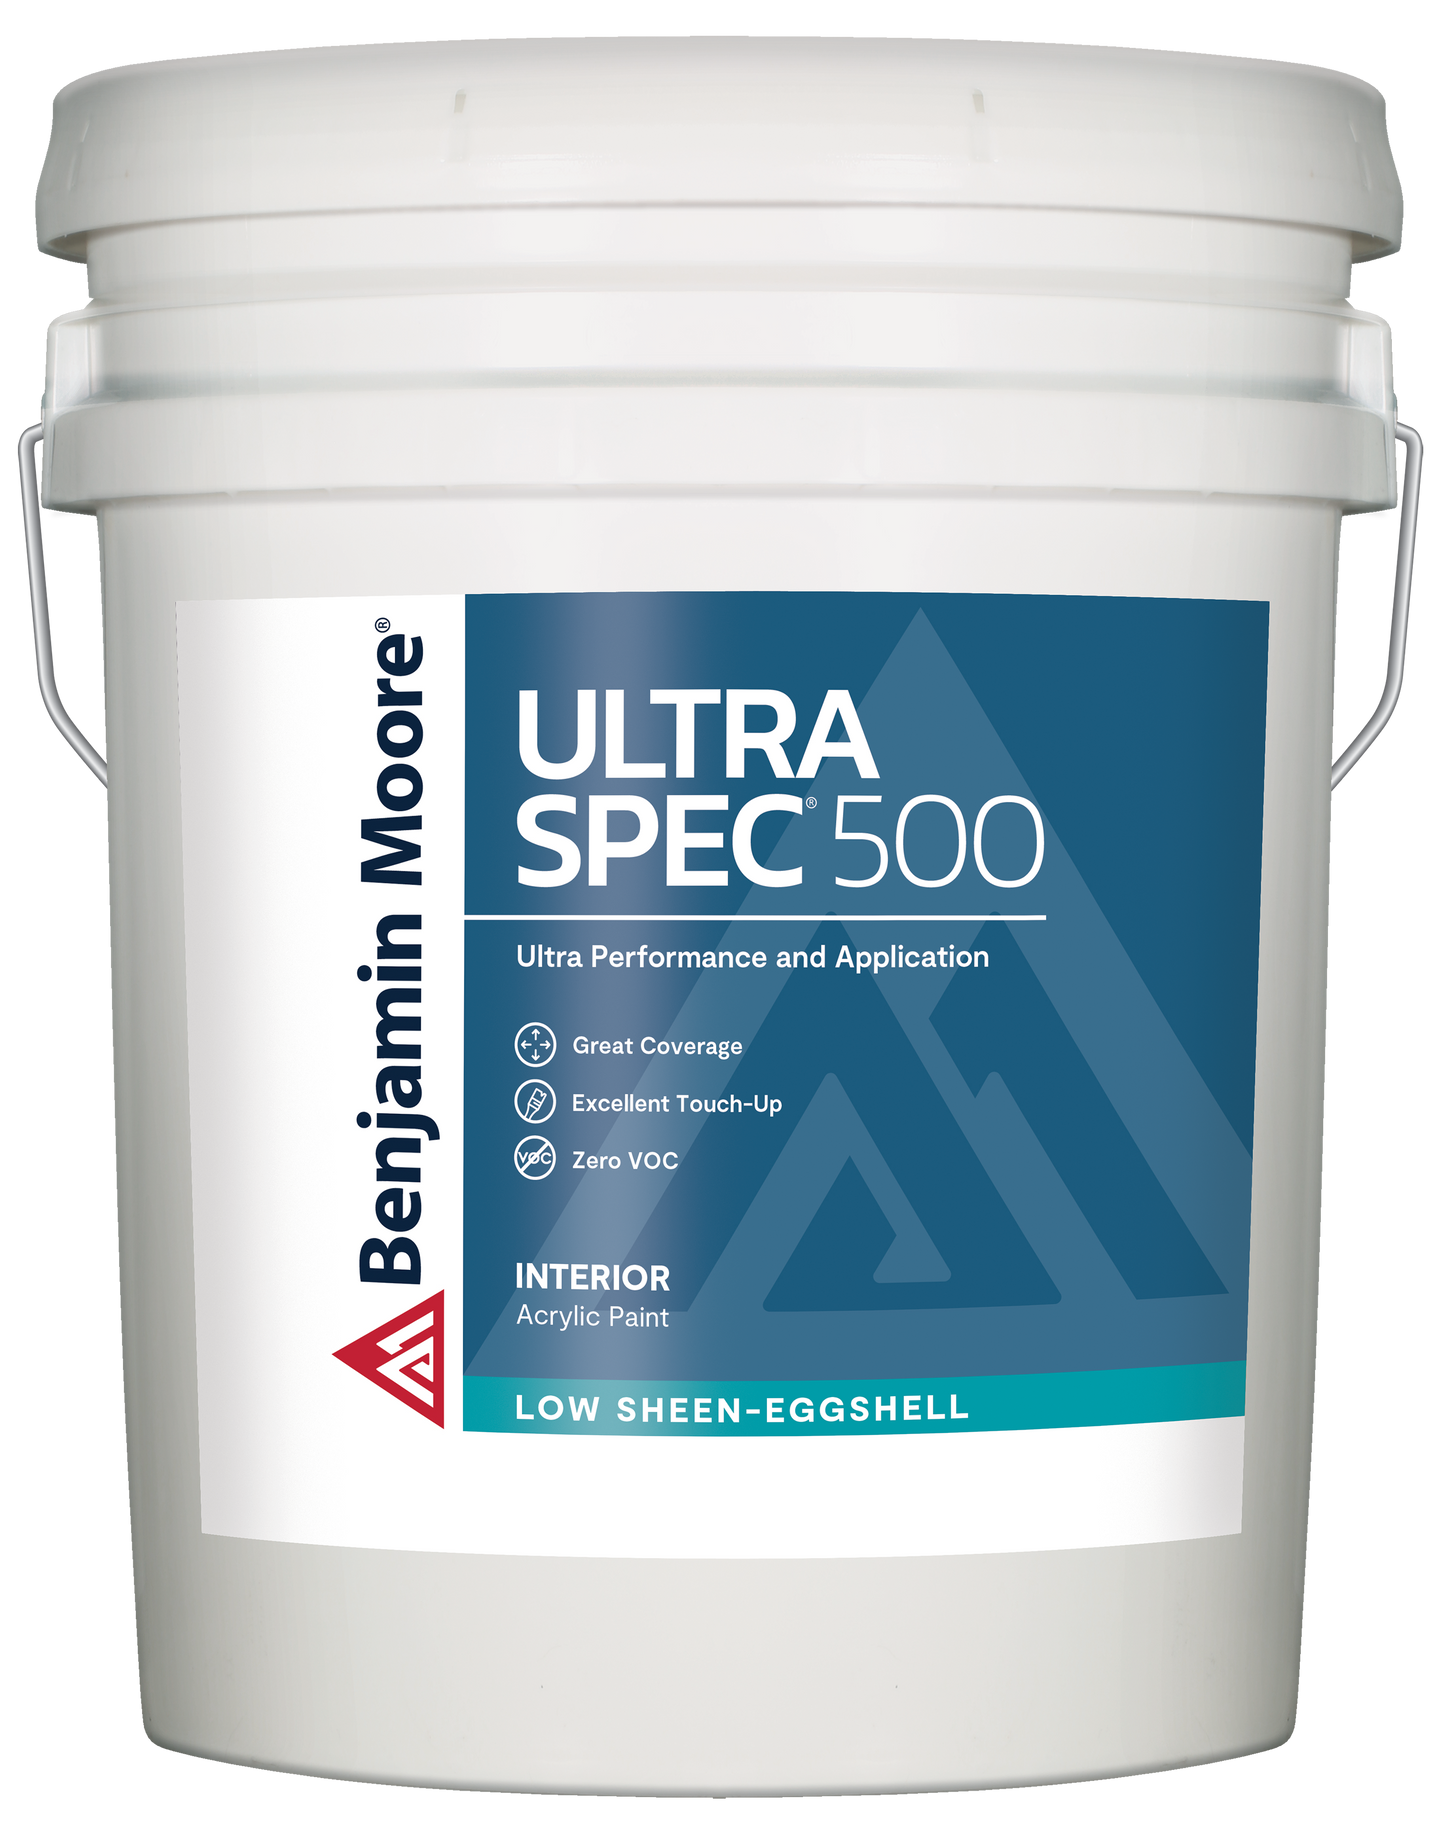 Benjamin Moore Ultra Spec 500 - Rossi Paint Stores - Low Sheen-Eggshell - 5 Gallon